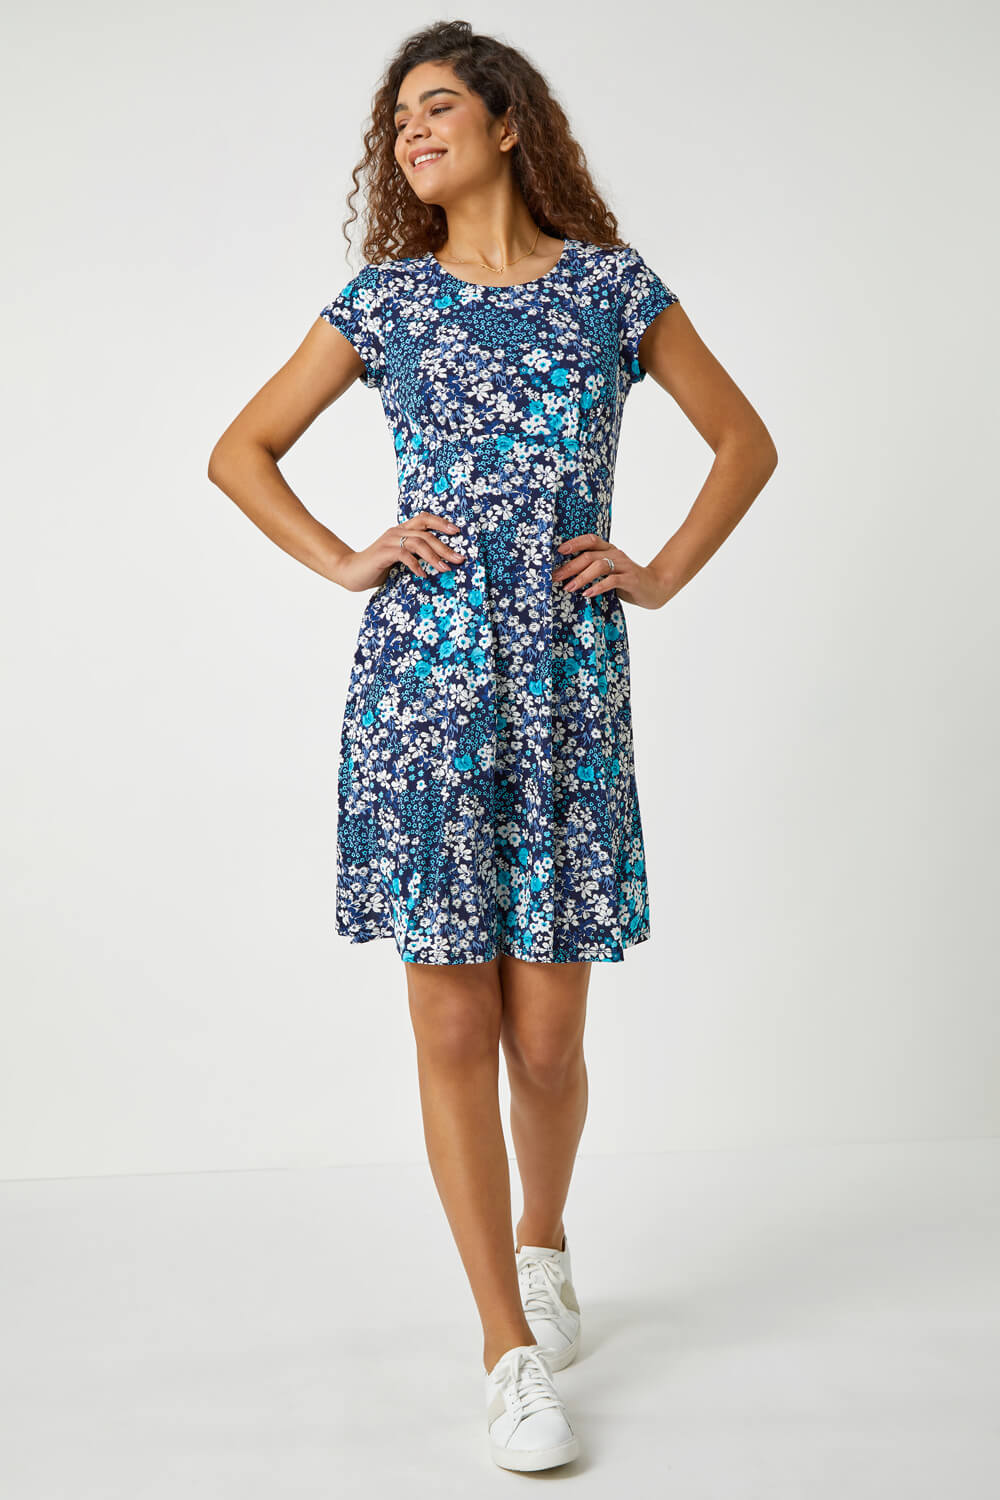 Blue Textured Floral Print Tea Dress, Image 2 of 5